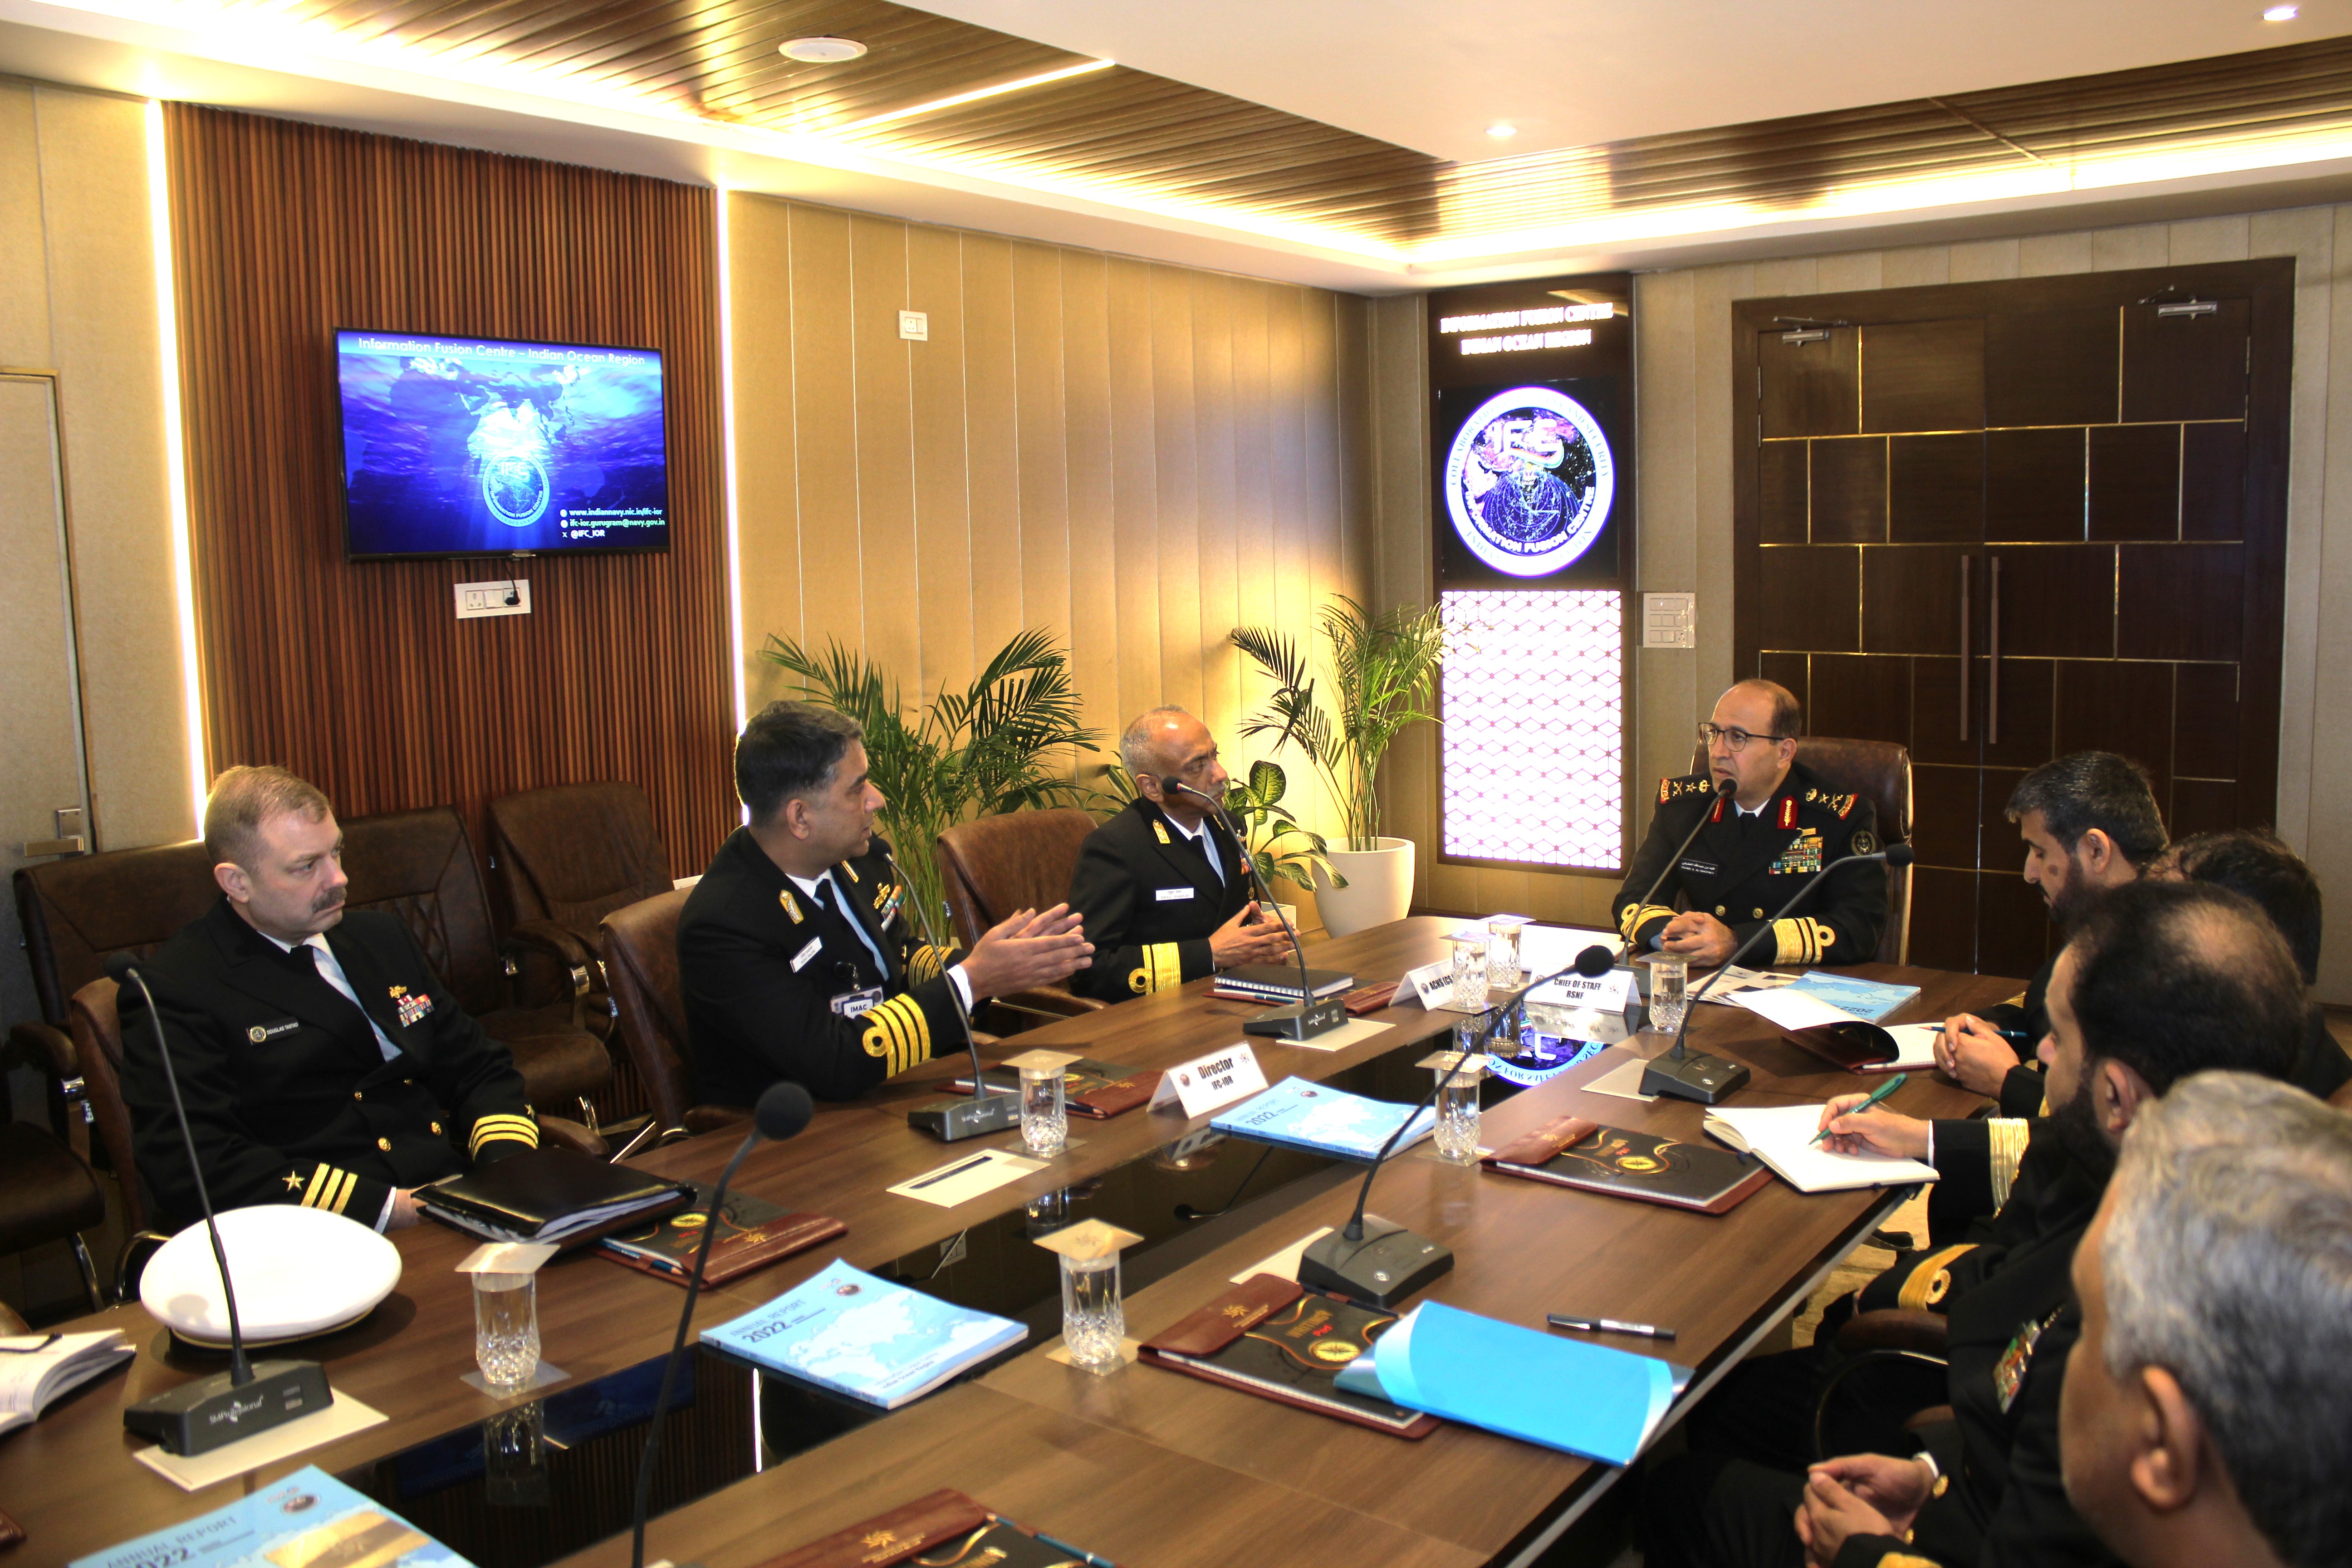 Visit of Chief of Staff, Royal Saudi Naval Forces at IFC-IOR - 12 Jan 24